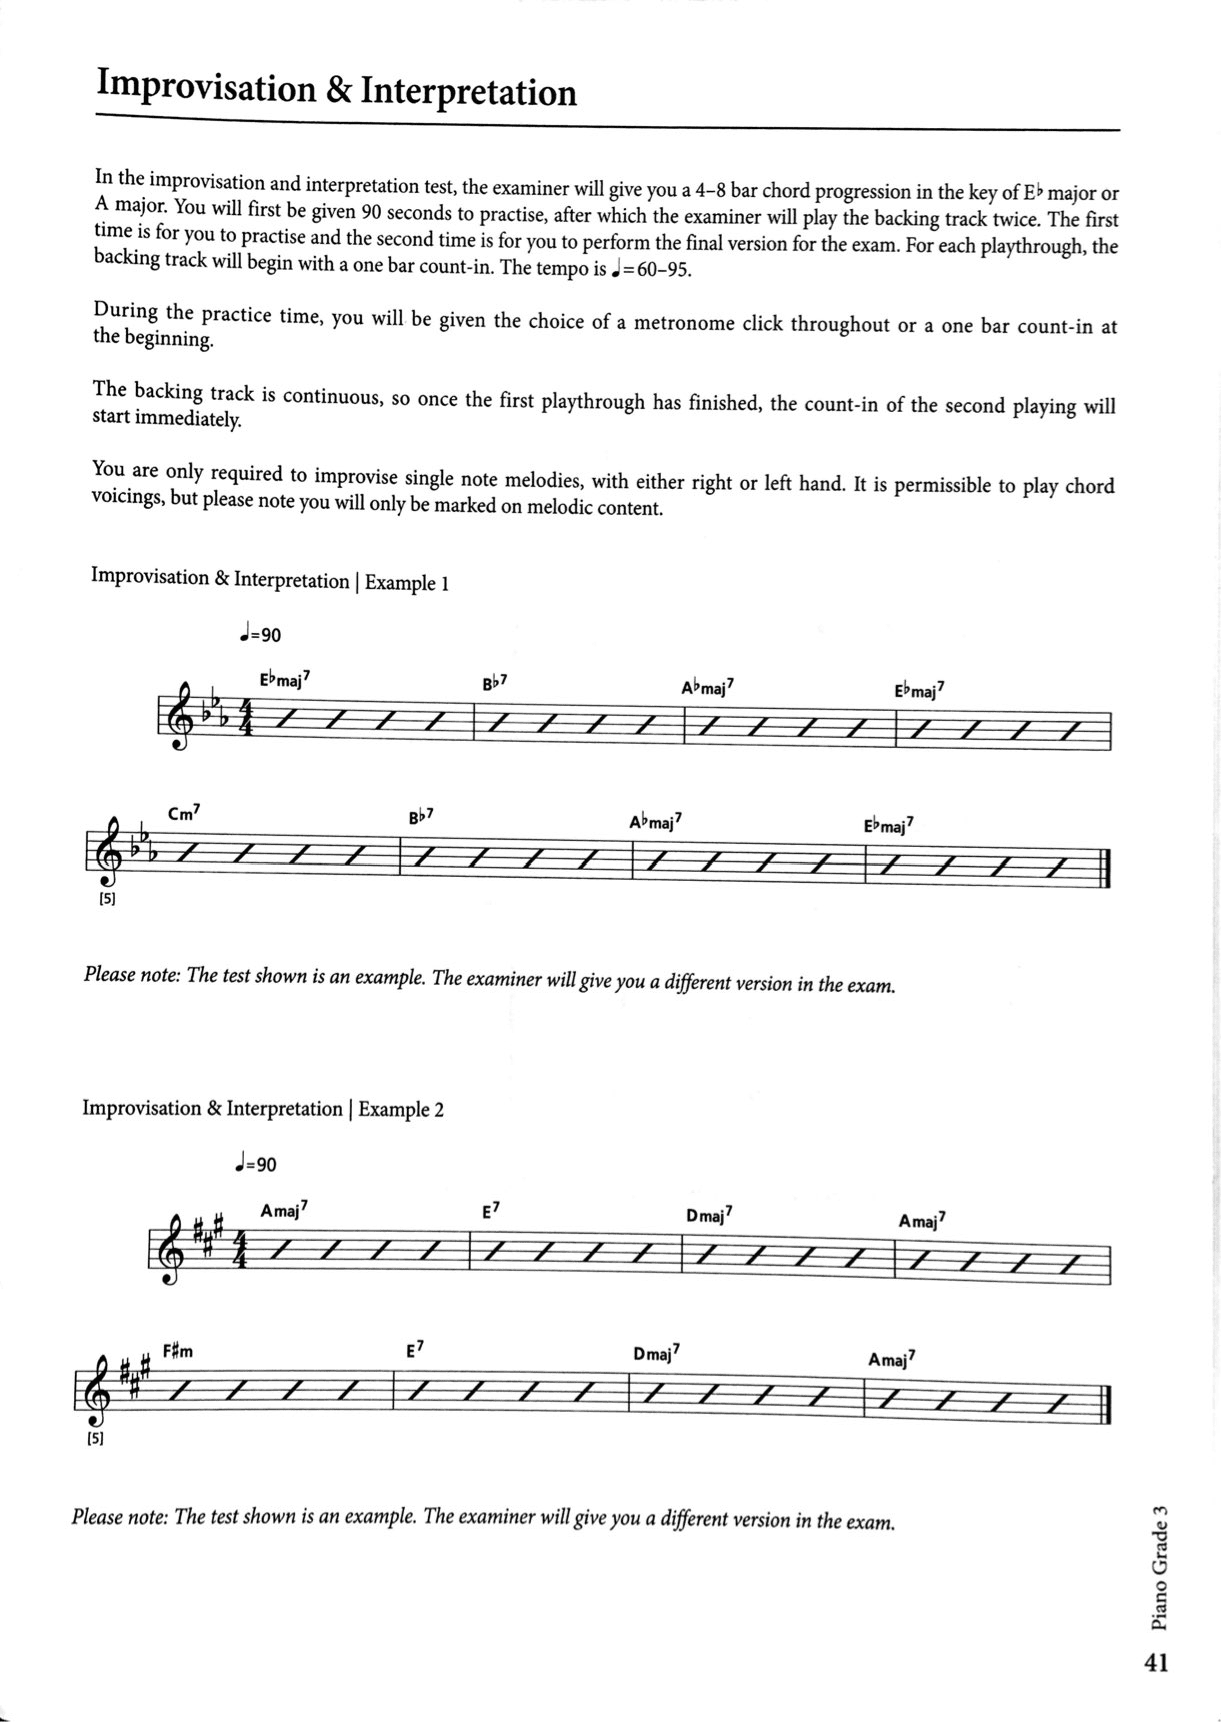 Grade 6 Piano Scales Practice Chart